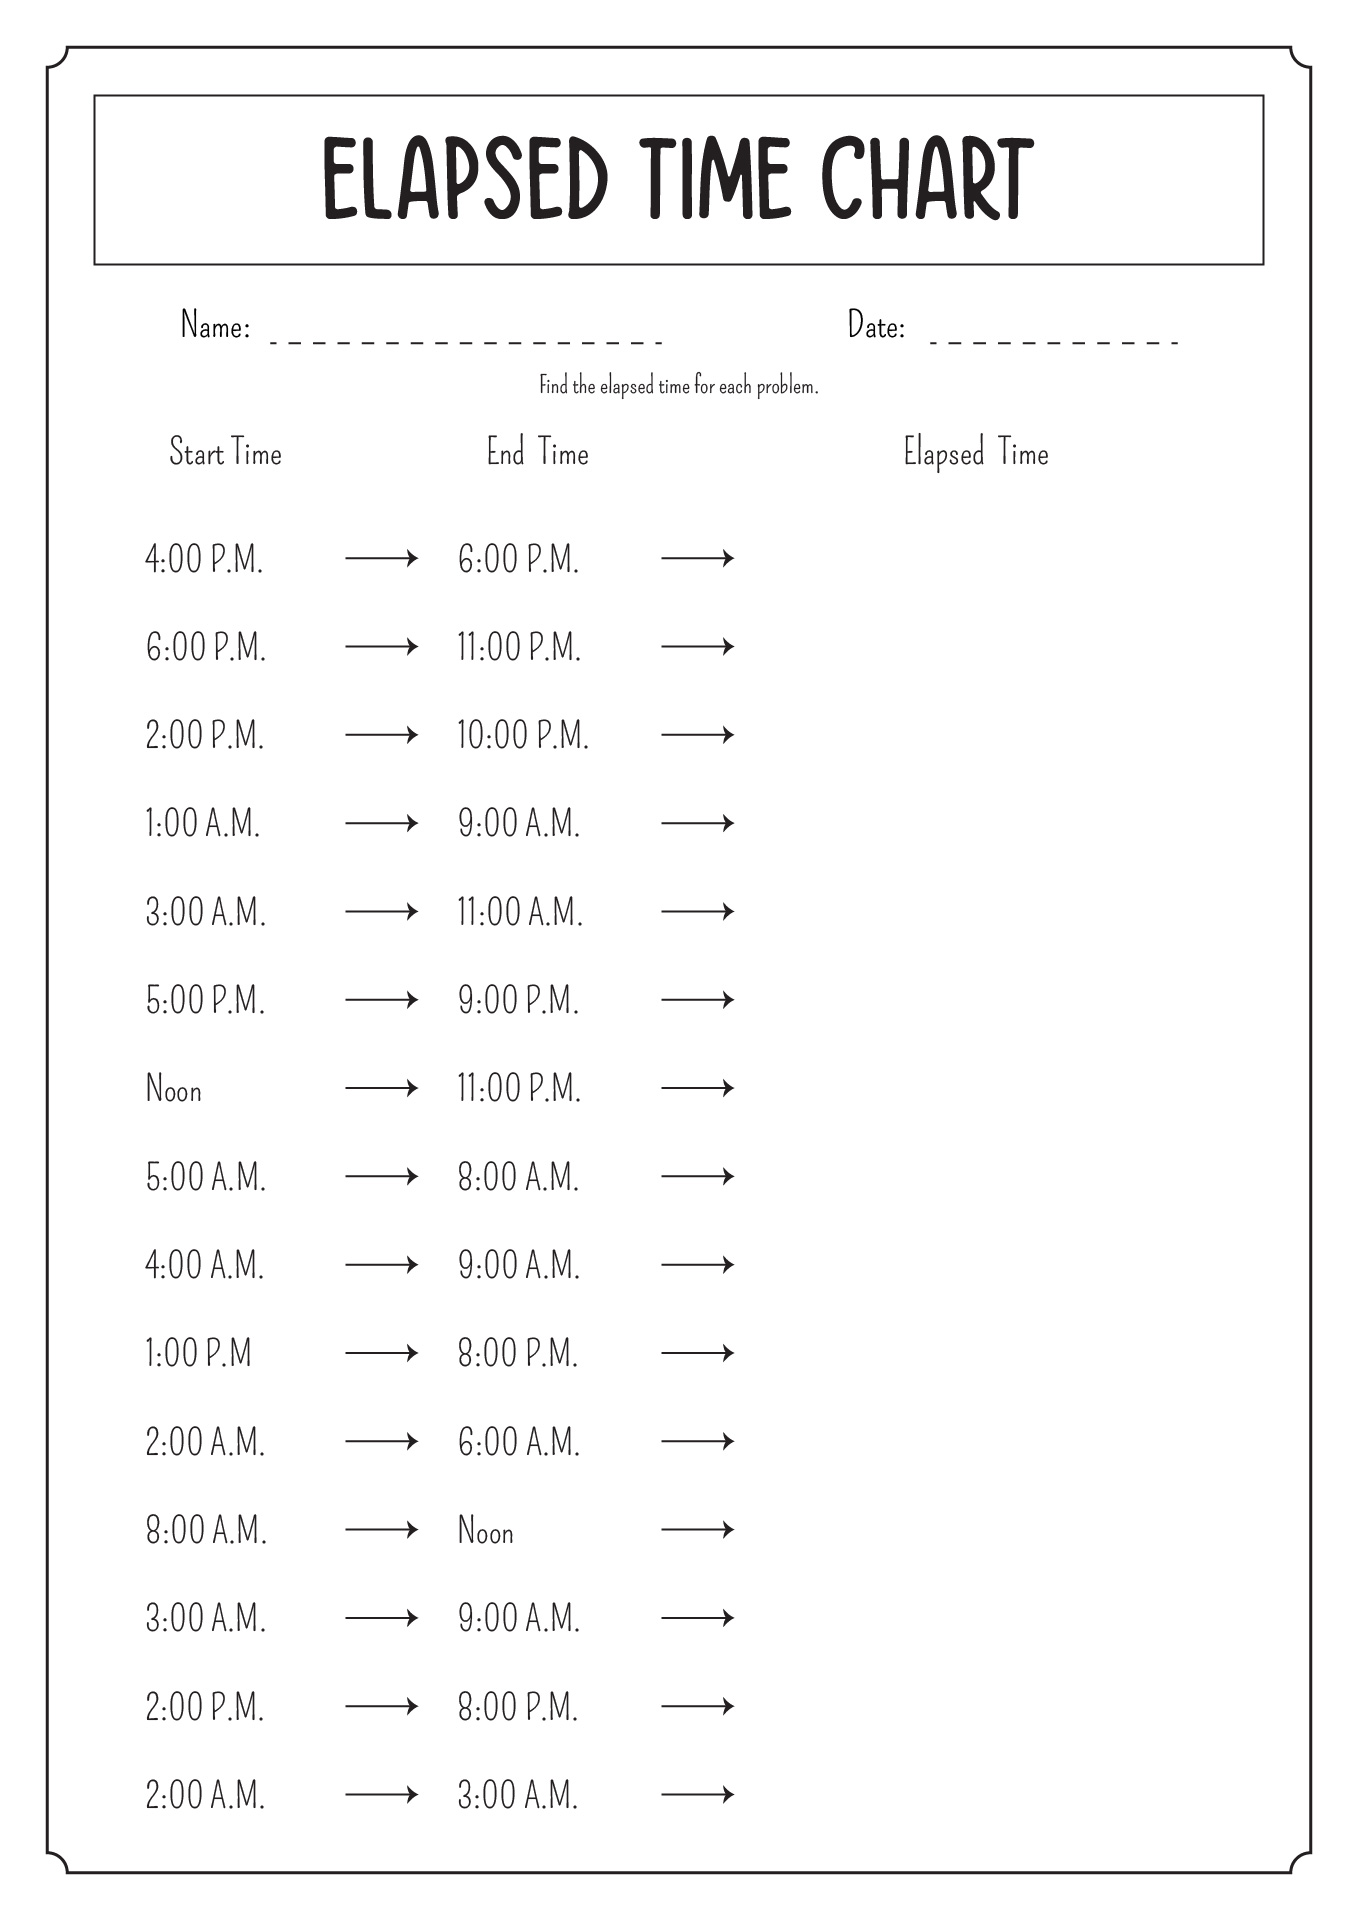 Free Printable Elapsed Time Chart Image